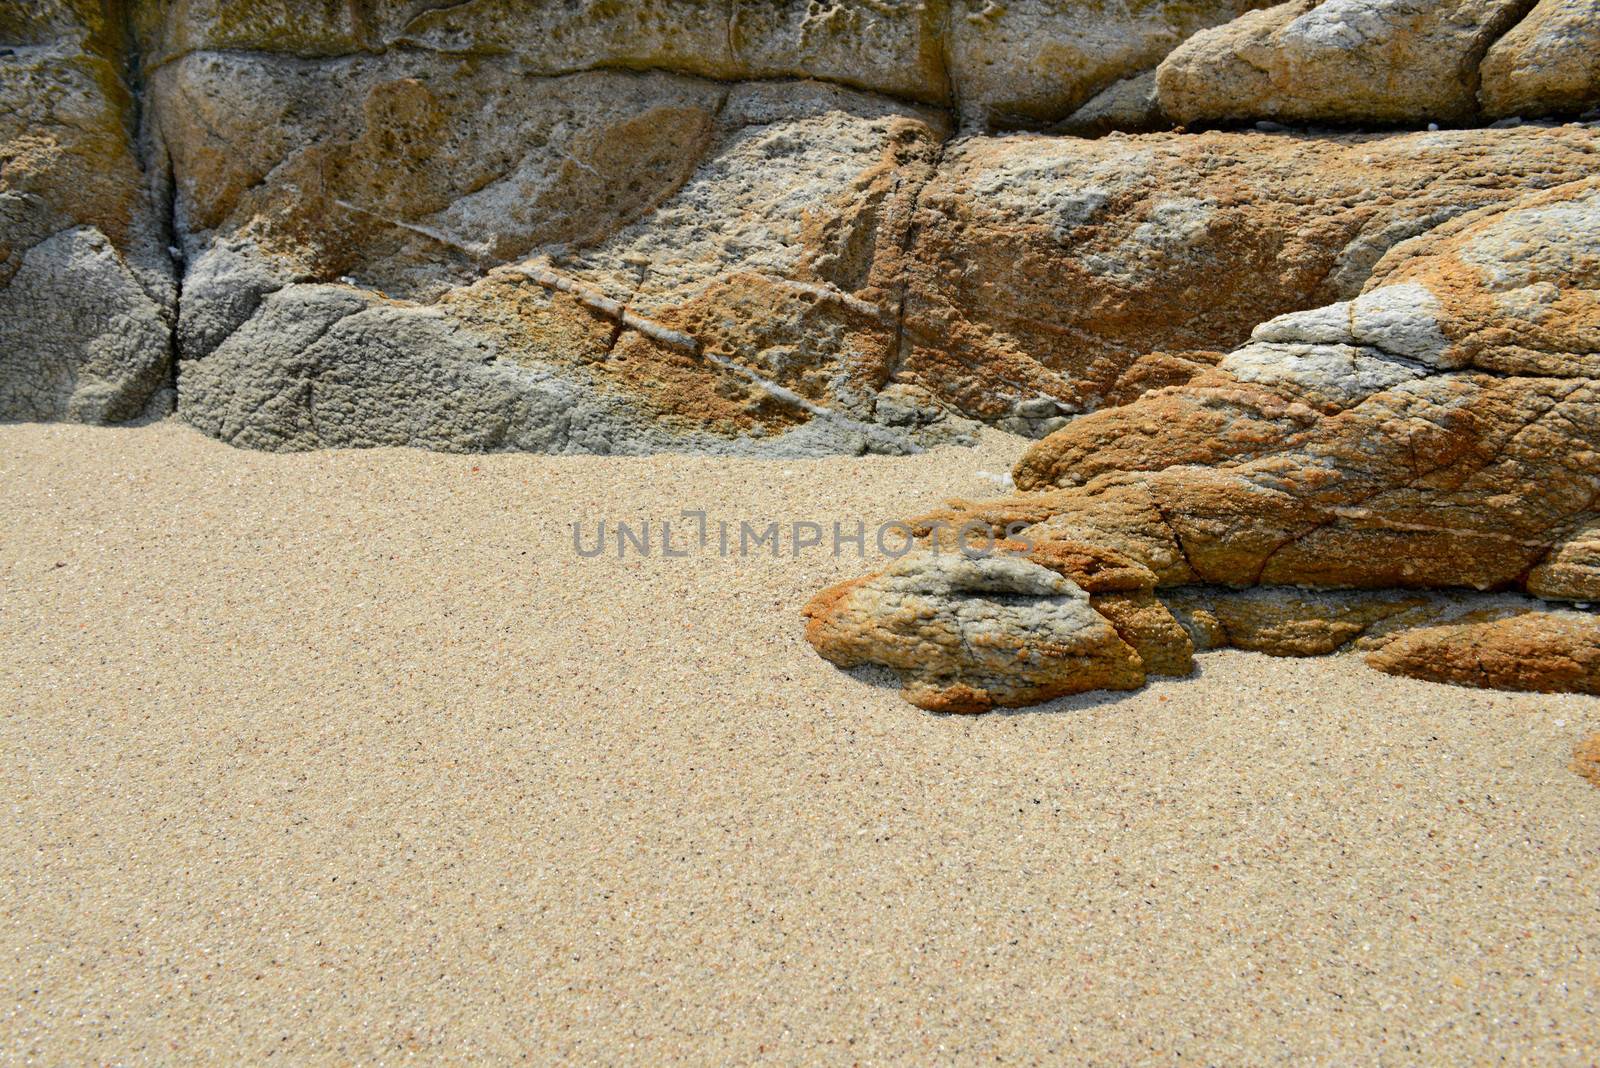 Sand beach rocks texture  by opasstudio